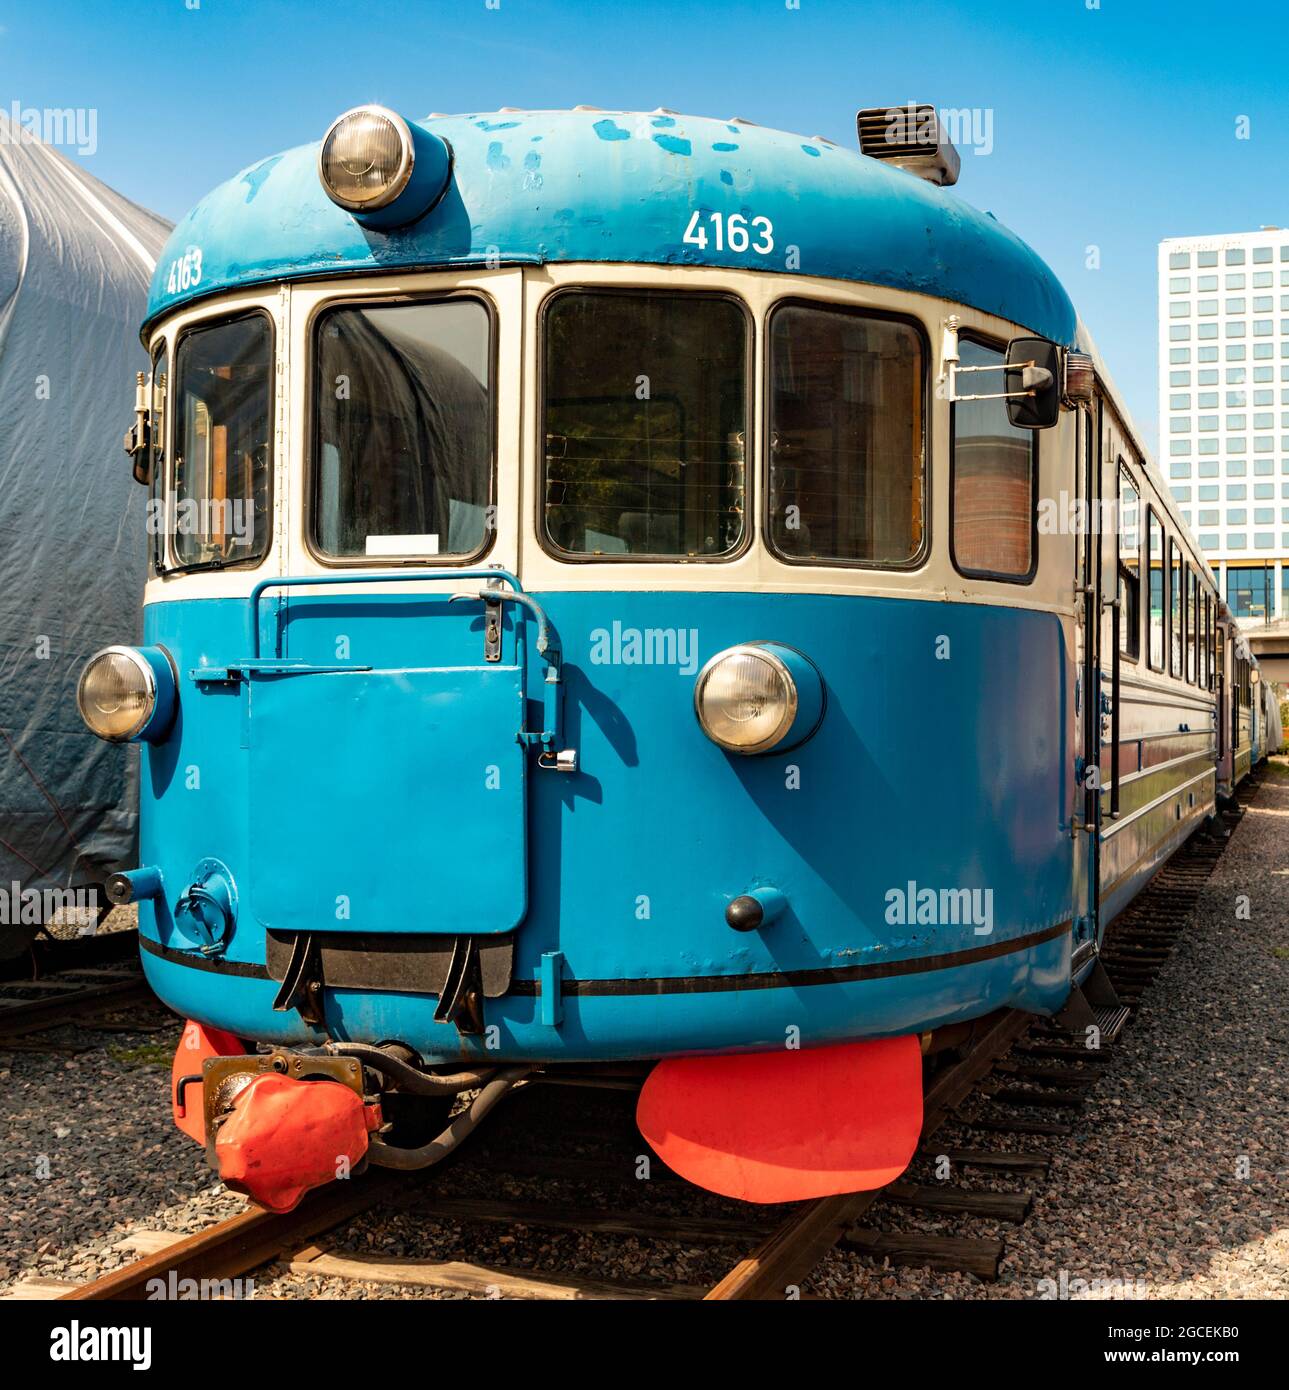 Vintage Valmet Dm7 railcar, manufactured in 1960, parked near Pasila railway station. Stock Photo